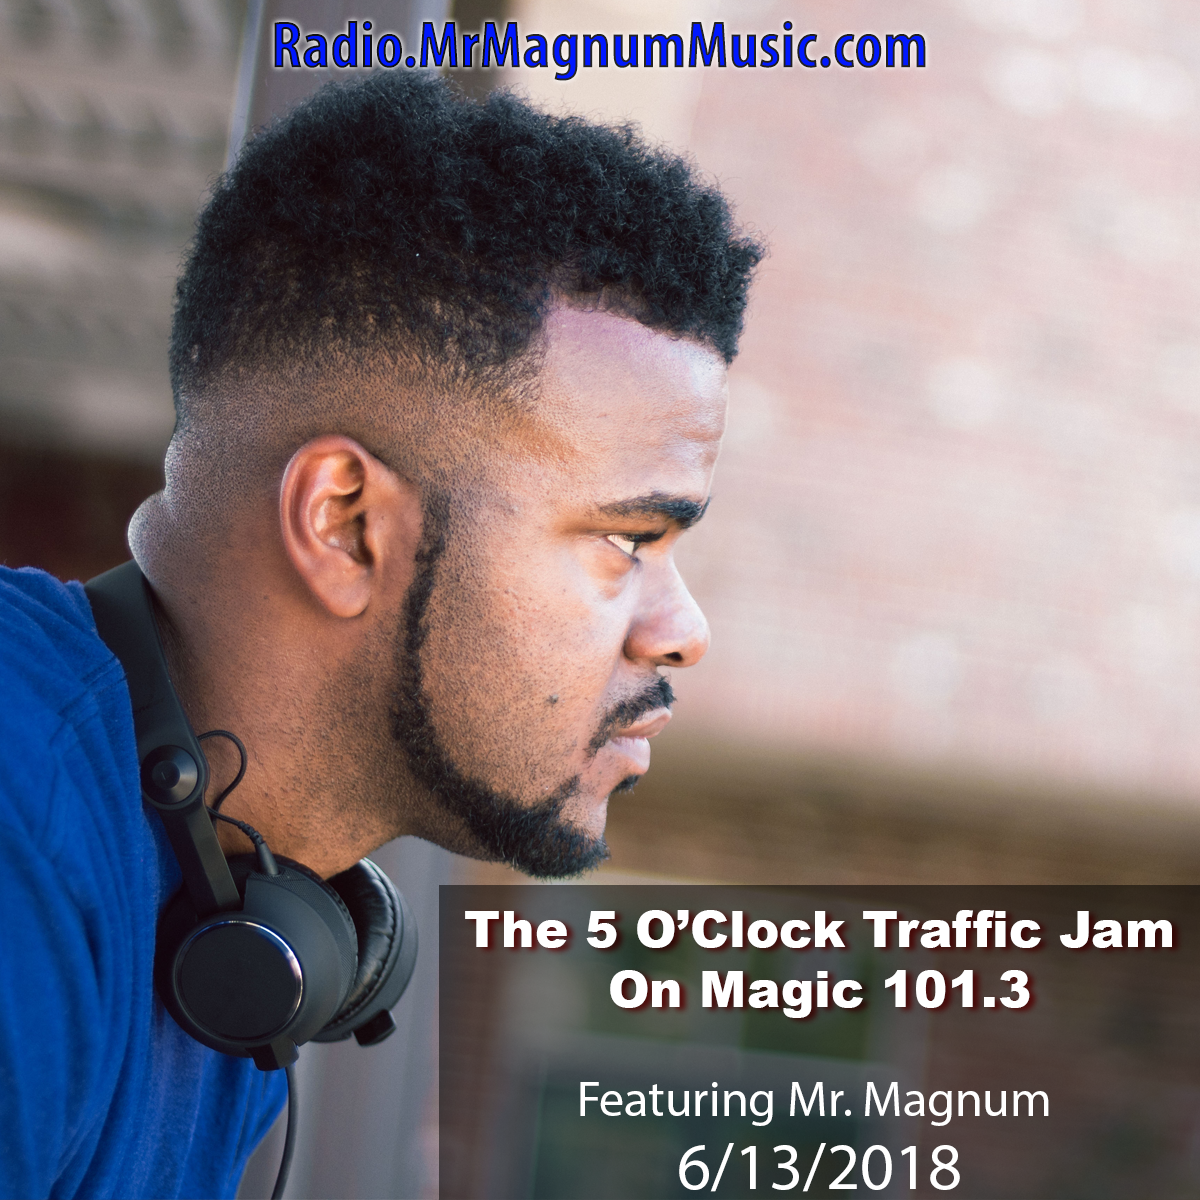 The 5 O'Clock Traffic Jam 20180613 featuring Gainesville's #1 DJ, Mr. Magnum on Magic 101.3